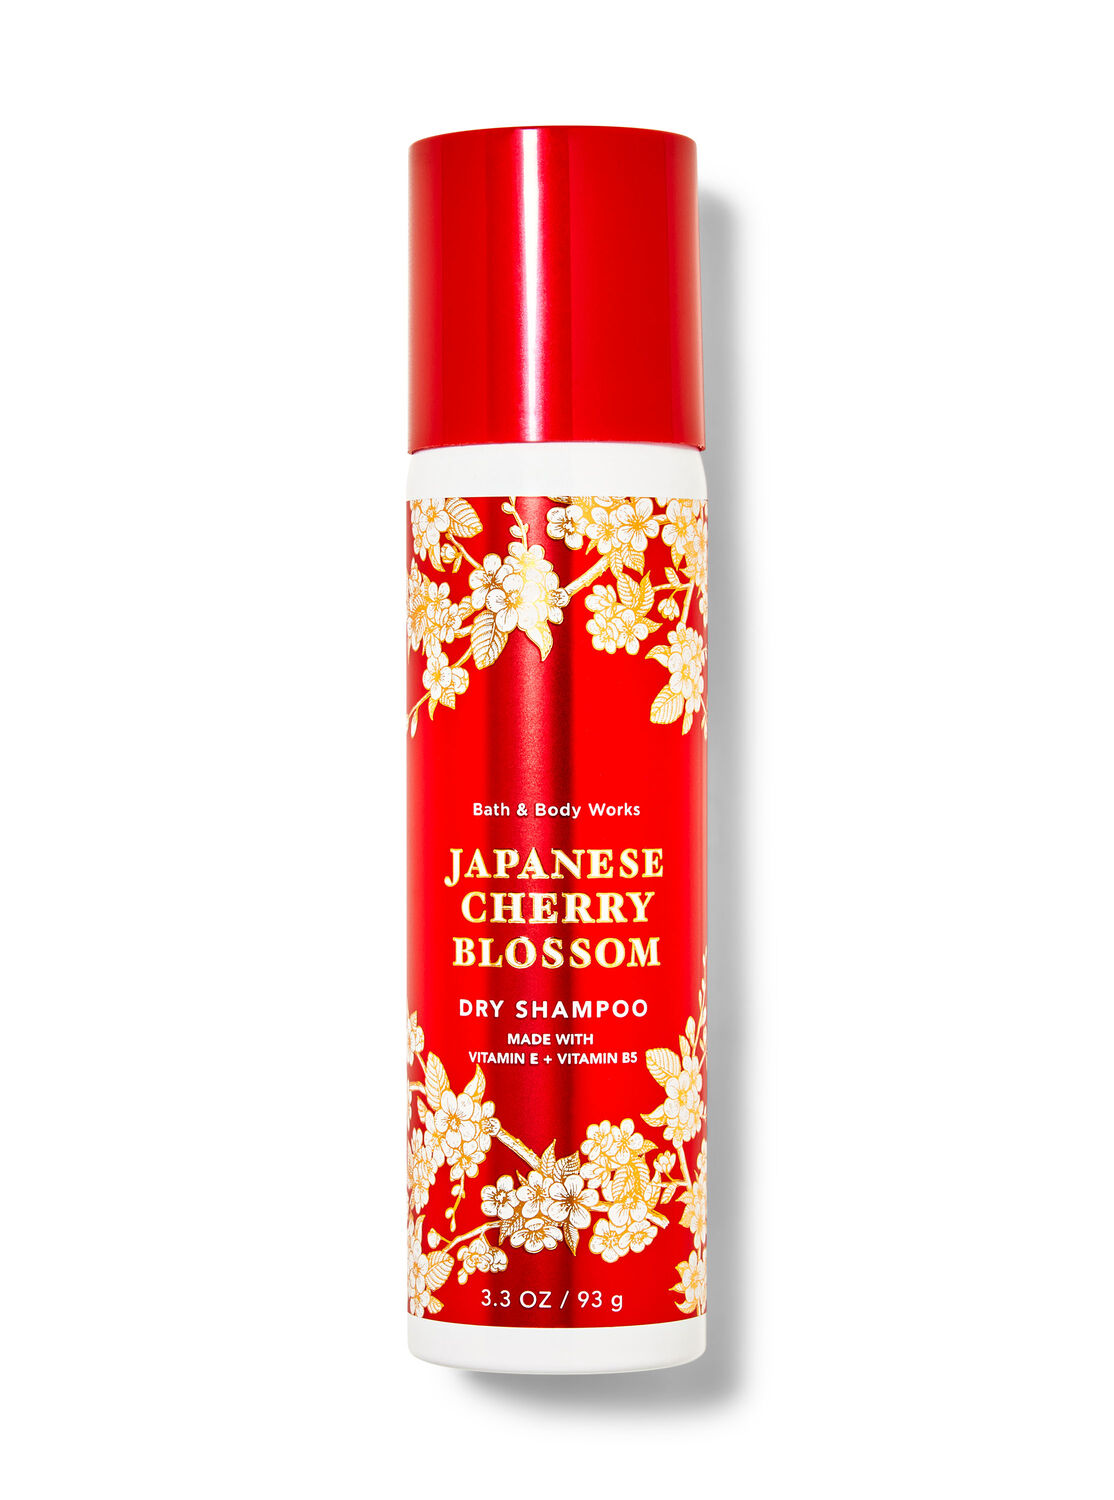 Reception Sparsommelig Løse Japanese Cherry Blossom Dry Shampoo | Bath & Body Works